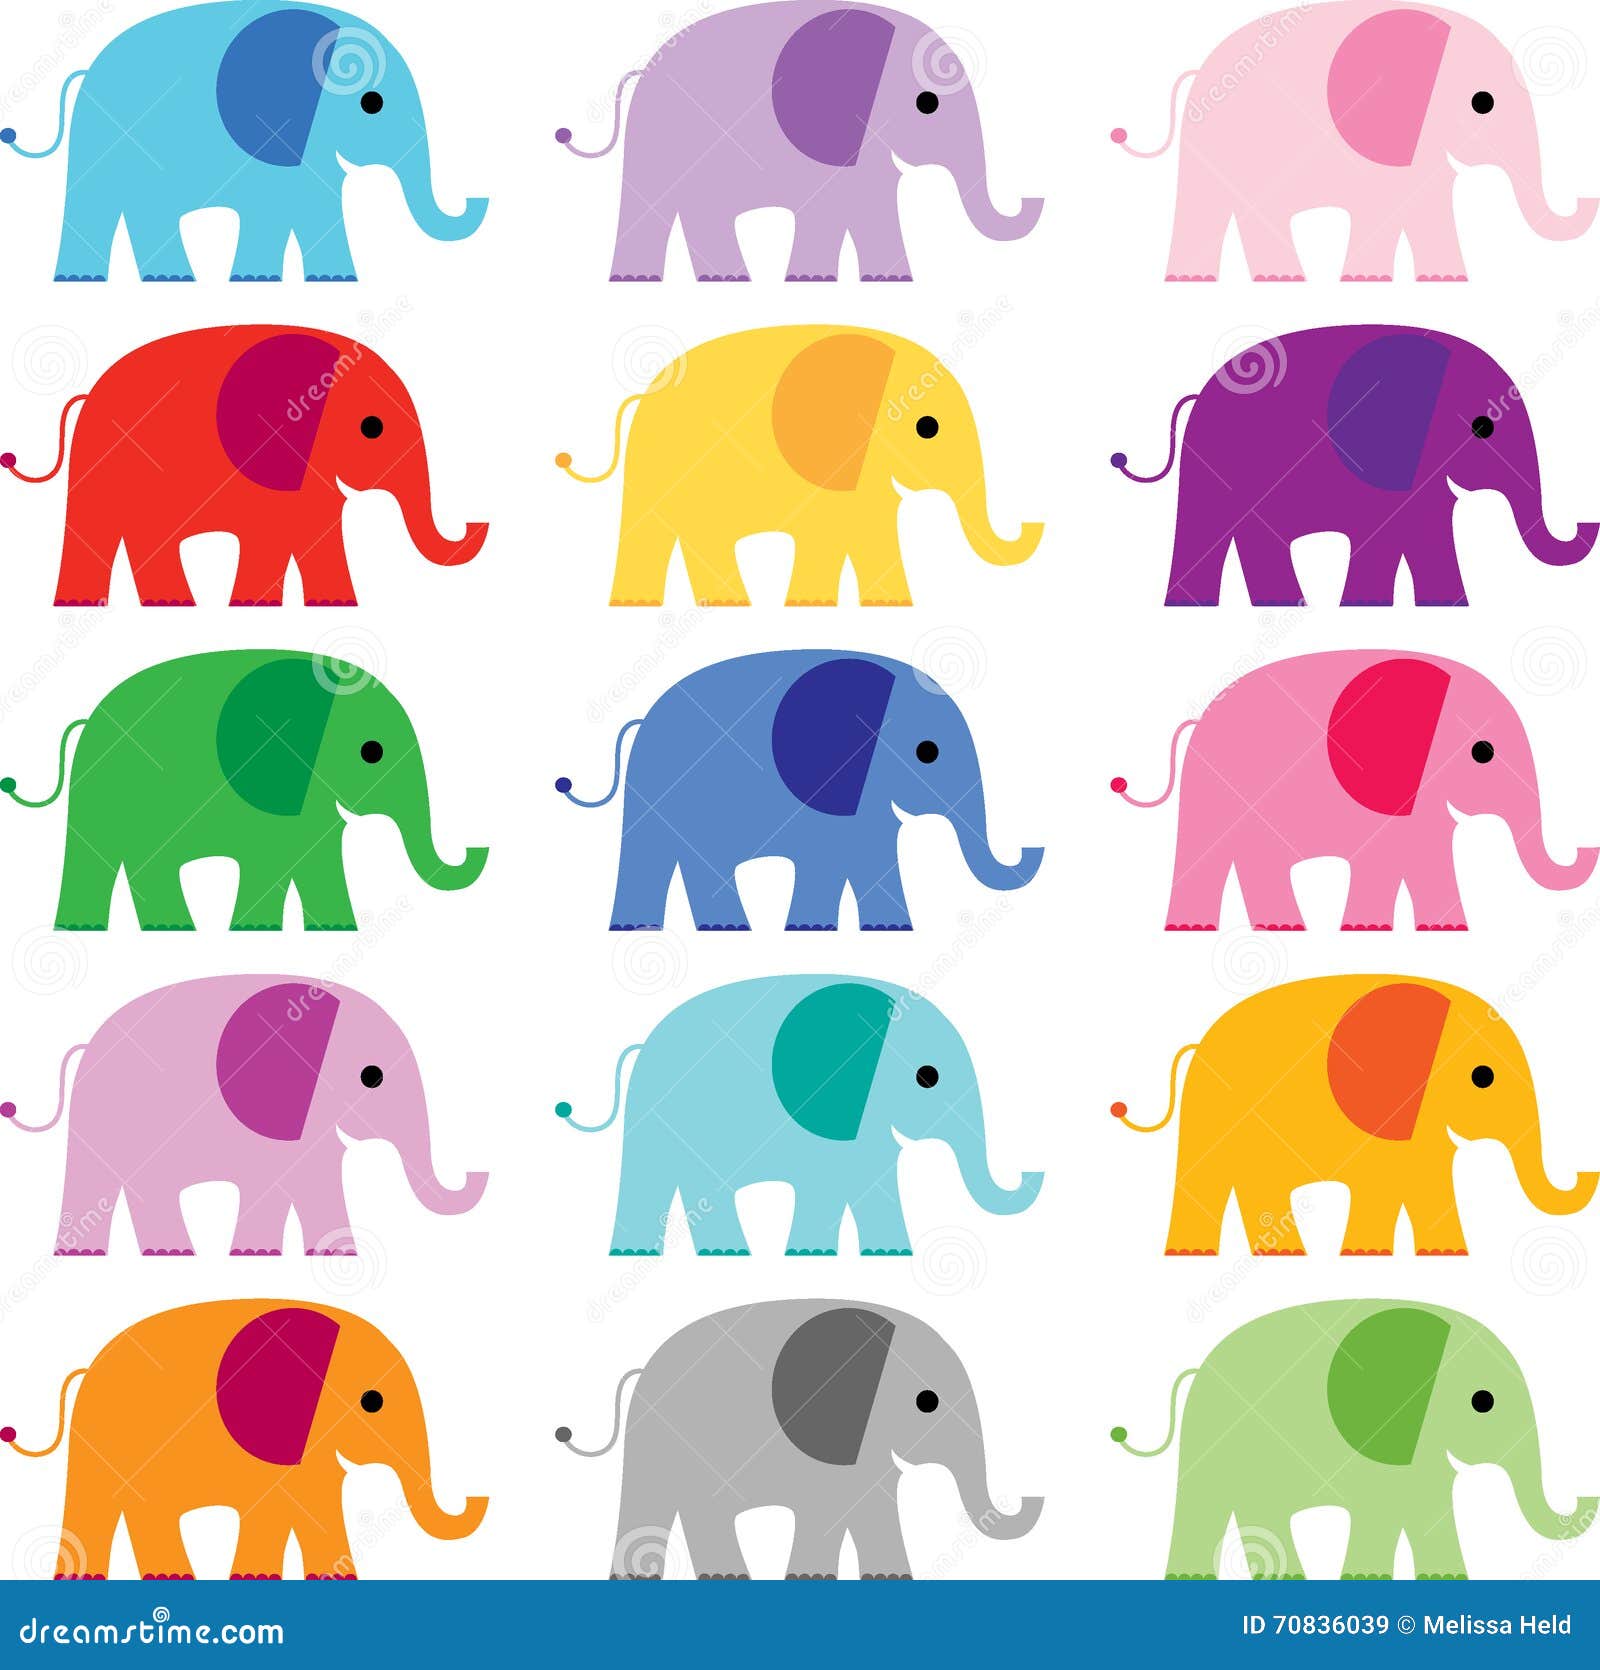 Cute elephant clipart stock illustration. Illustration of ...